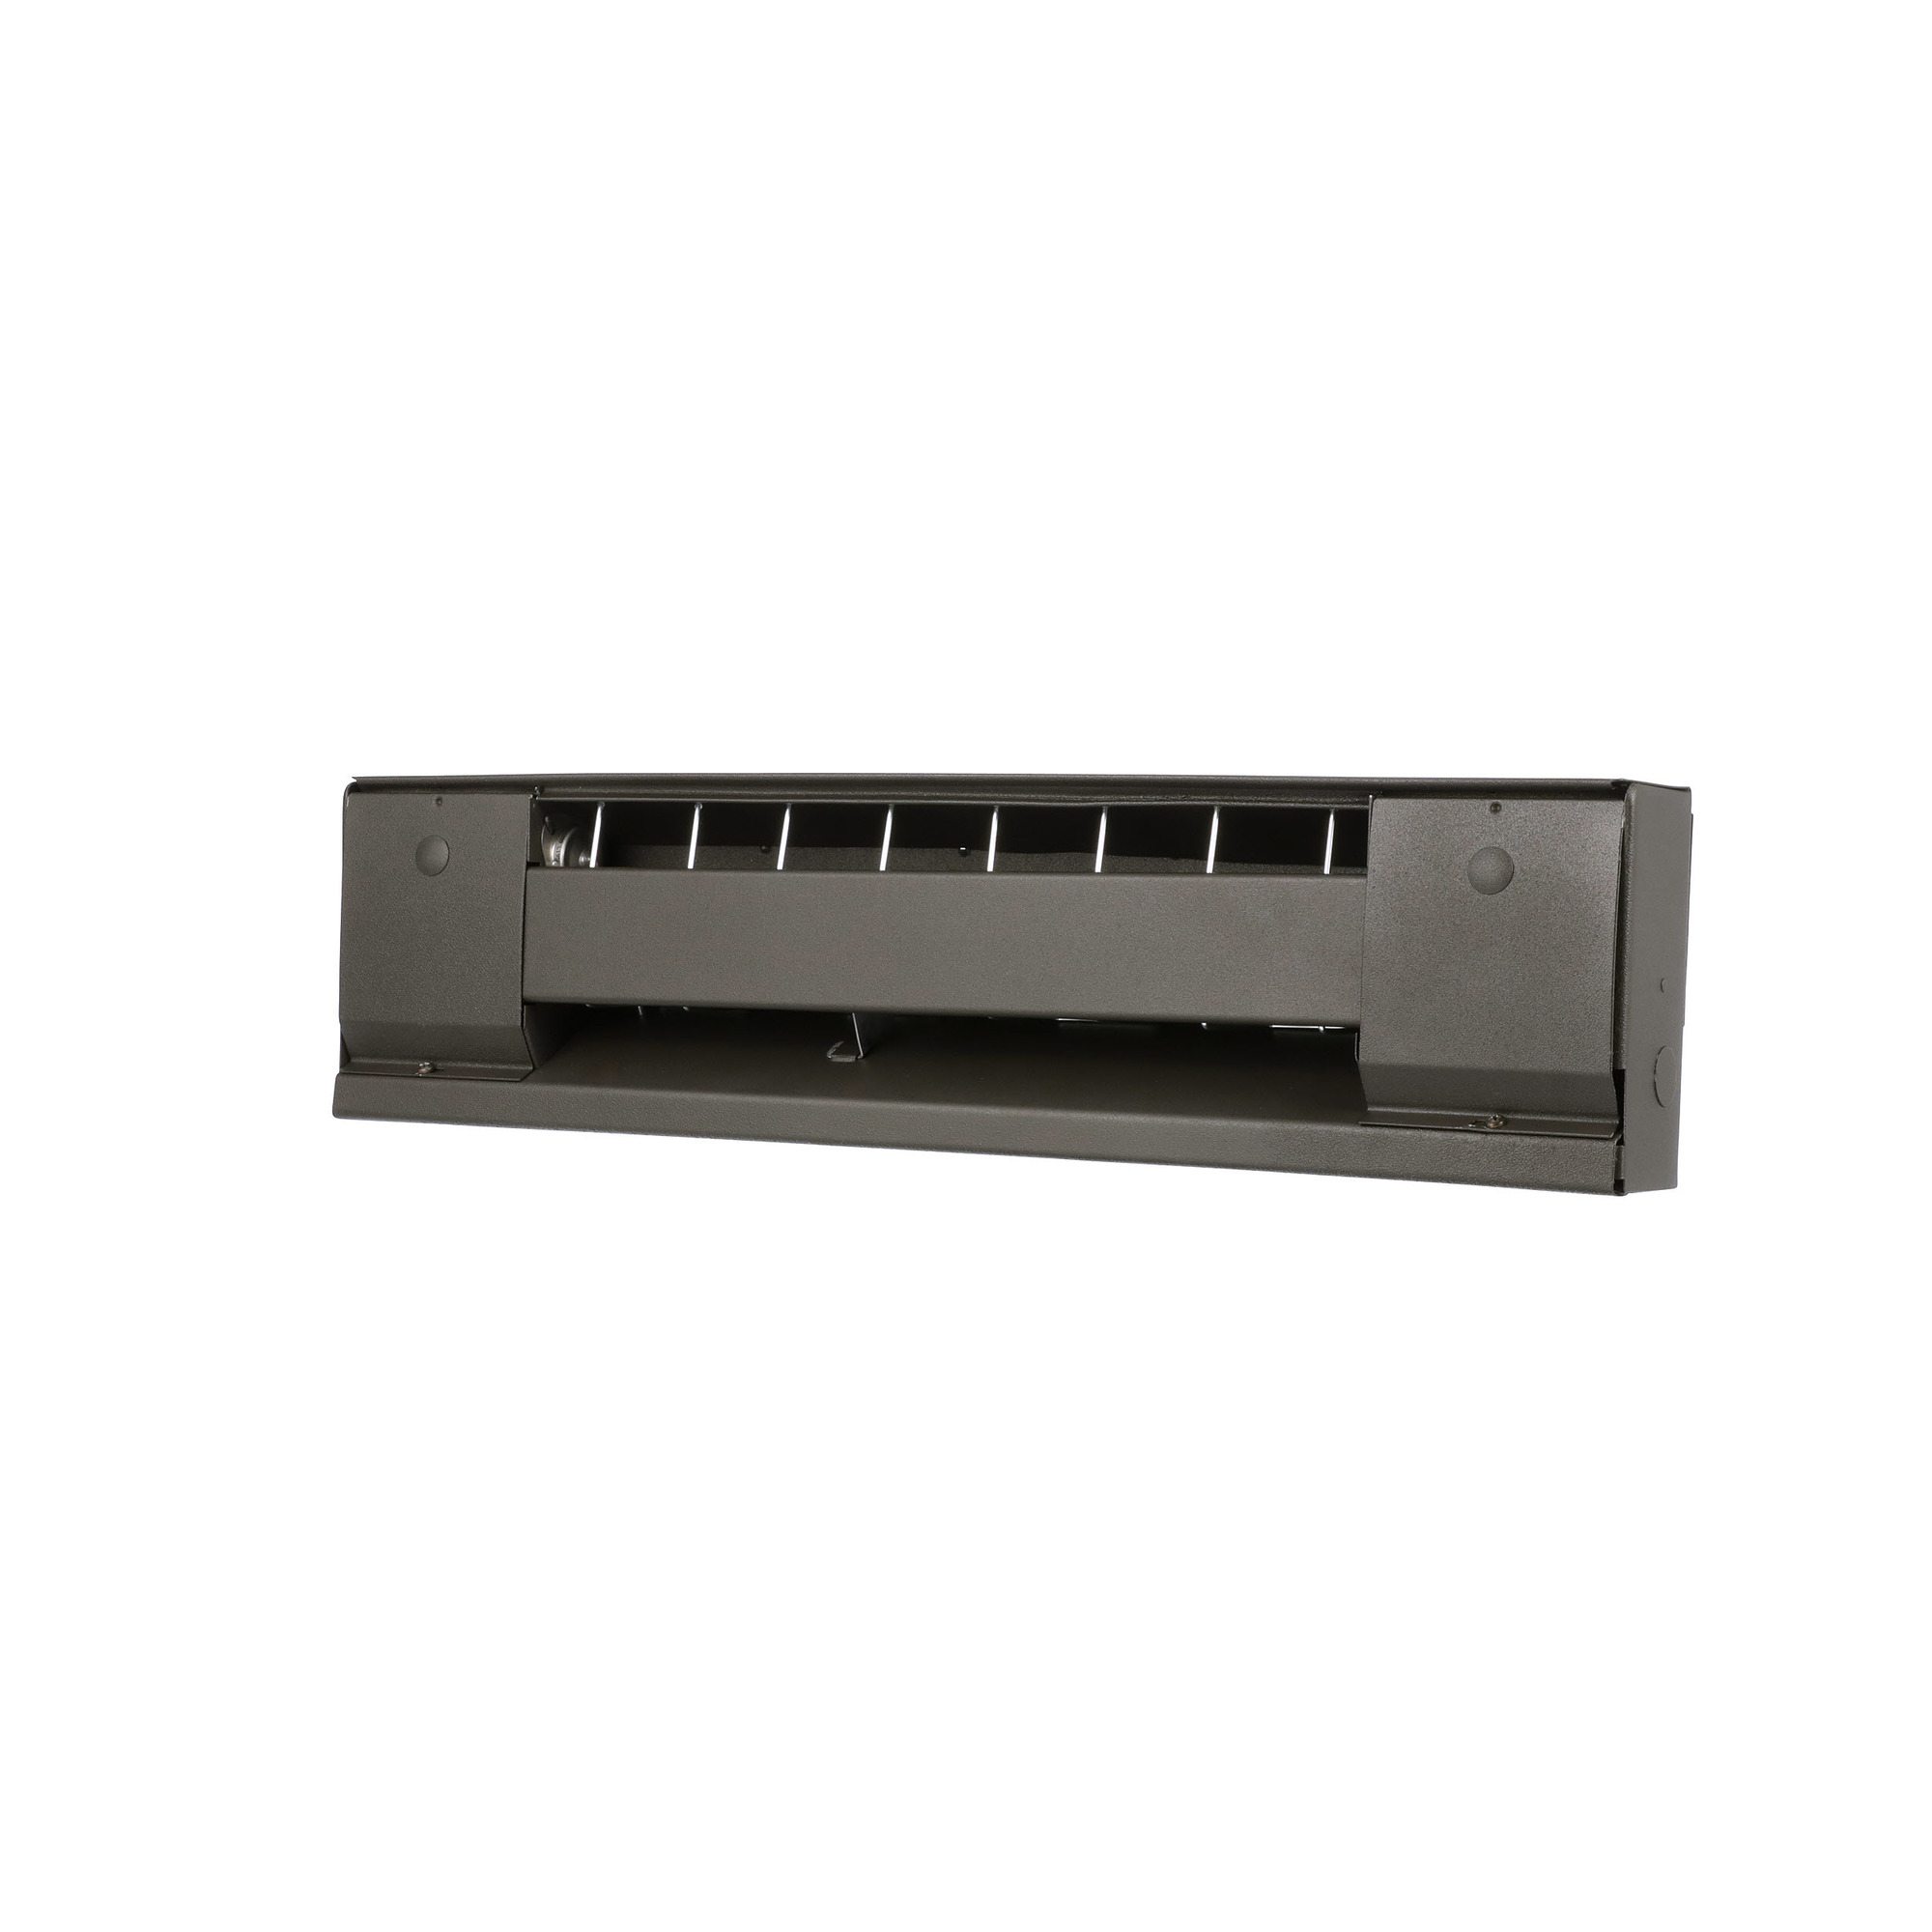 TPI Markel, Baseboard Electric Heater, Model H2903024C